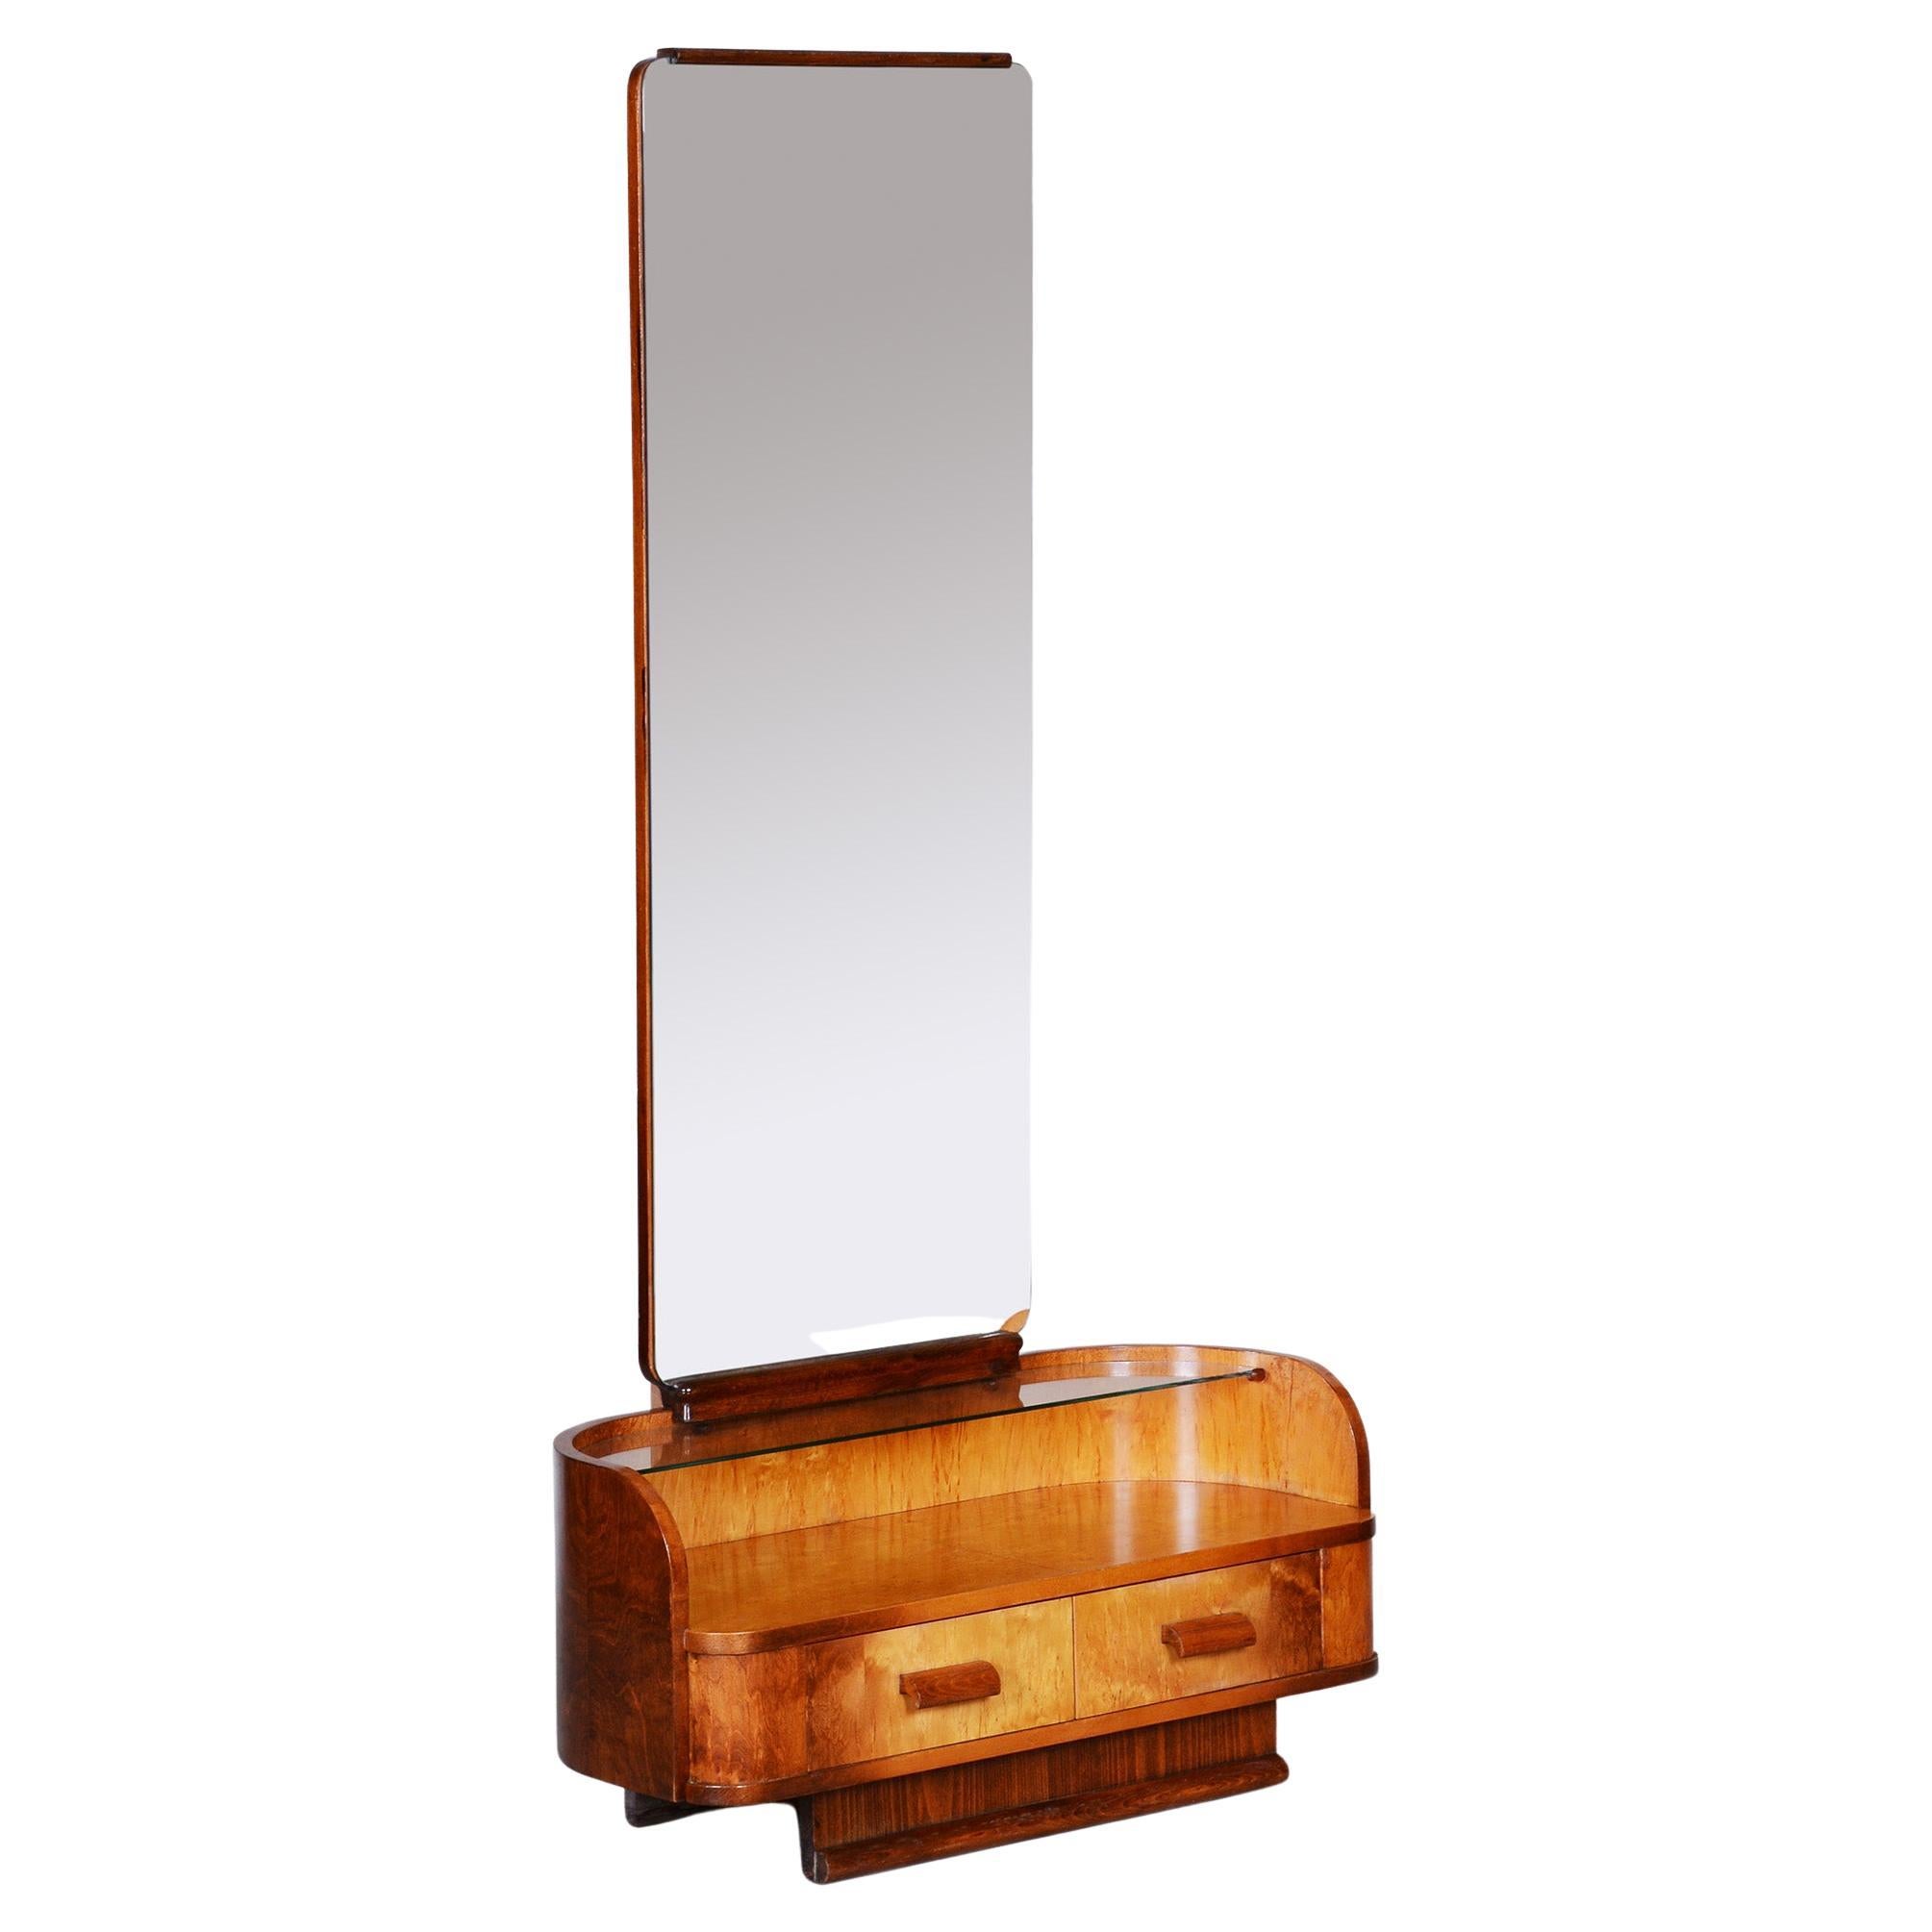 Walnut-Maple Art Deco Dressing Mirror, Jindrich Halabala for Up Zavody, 1930s